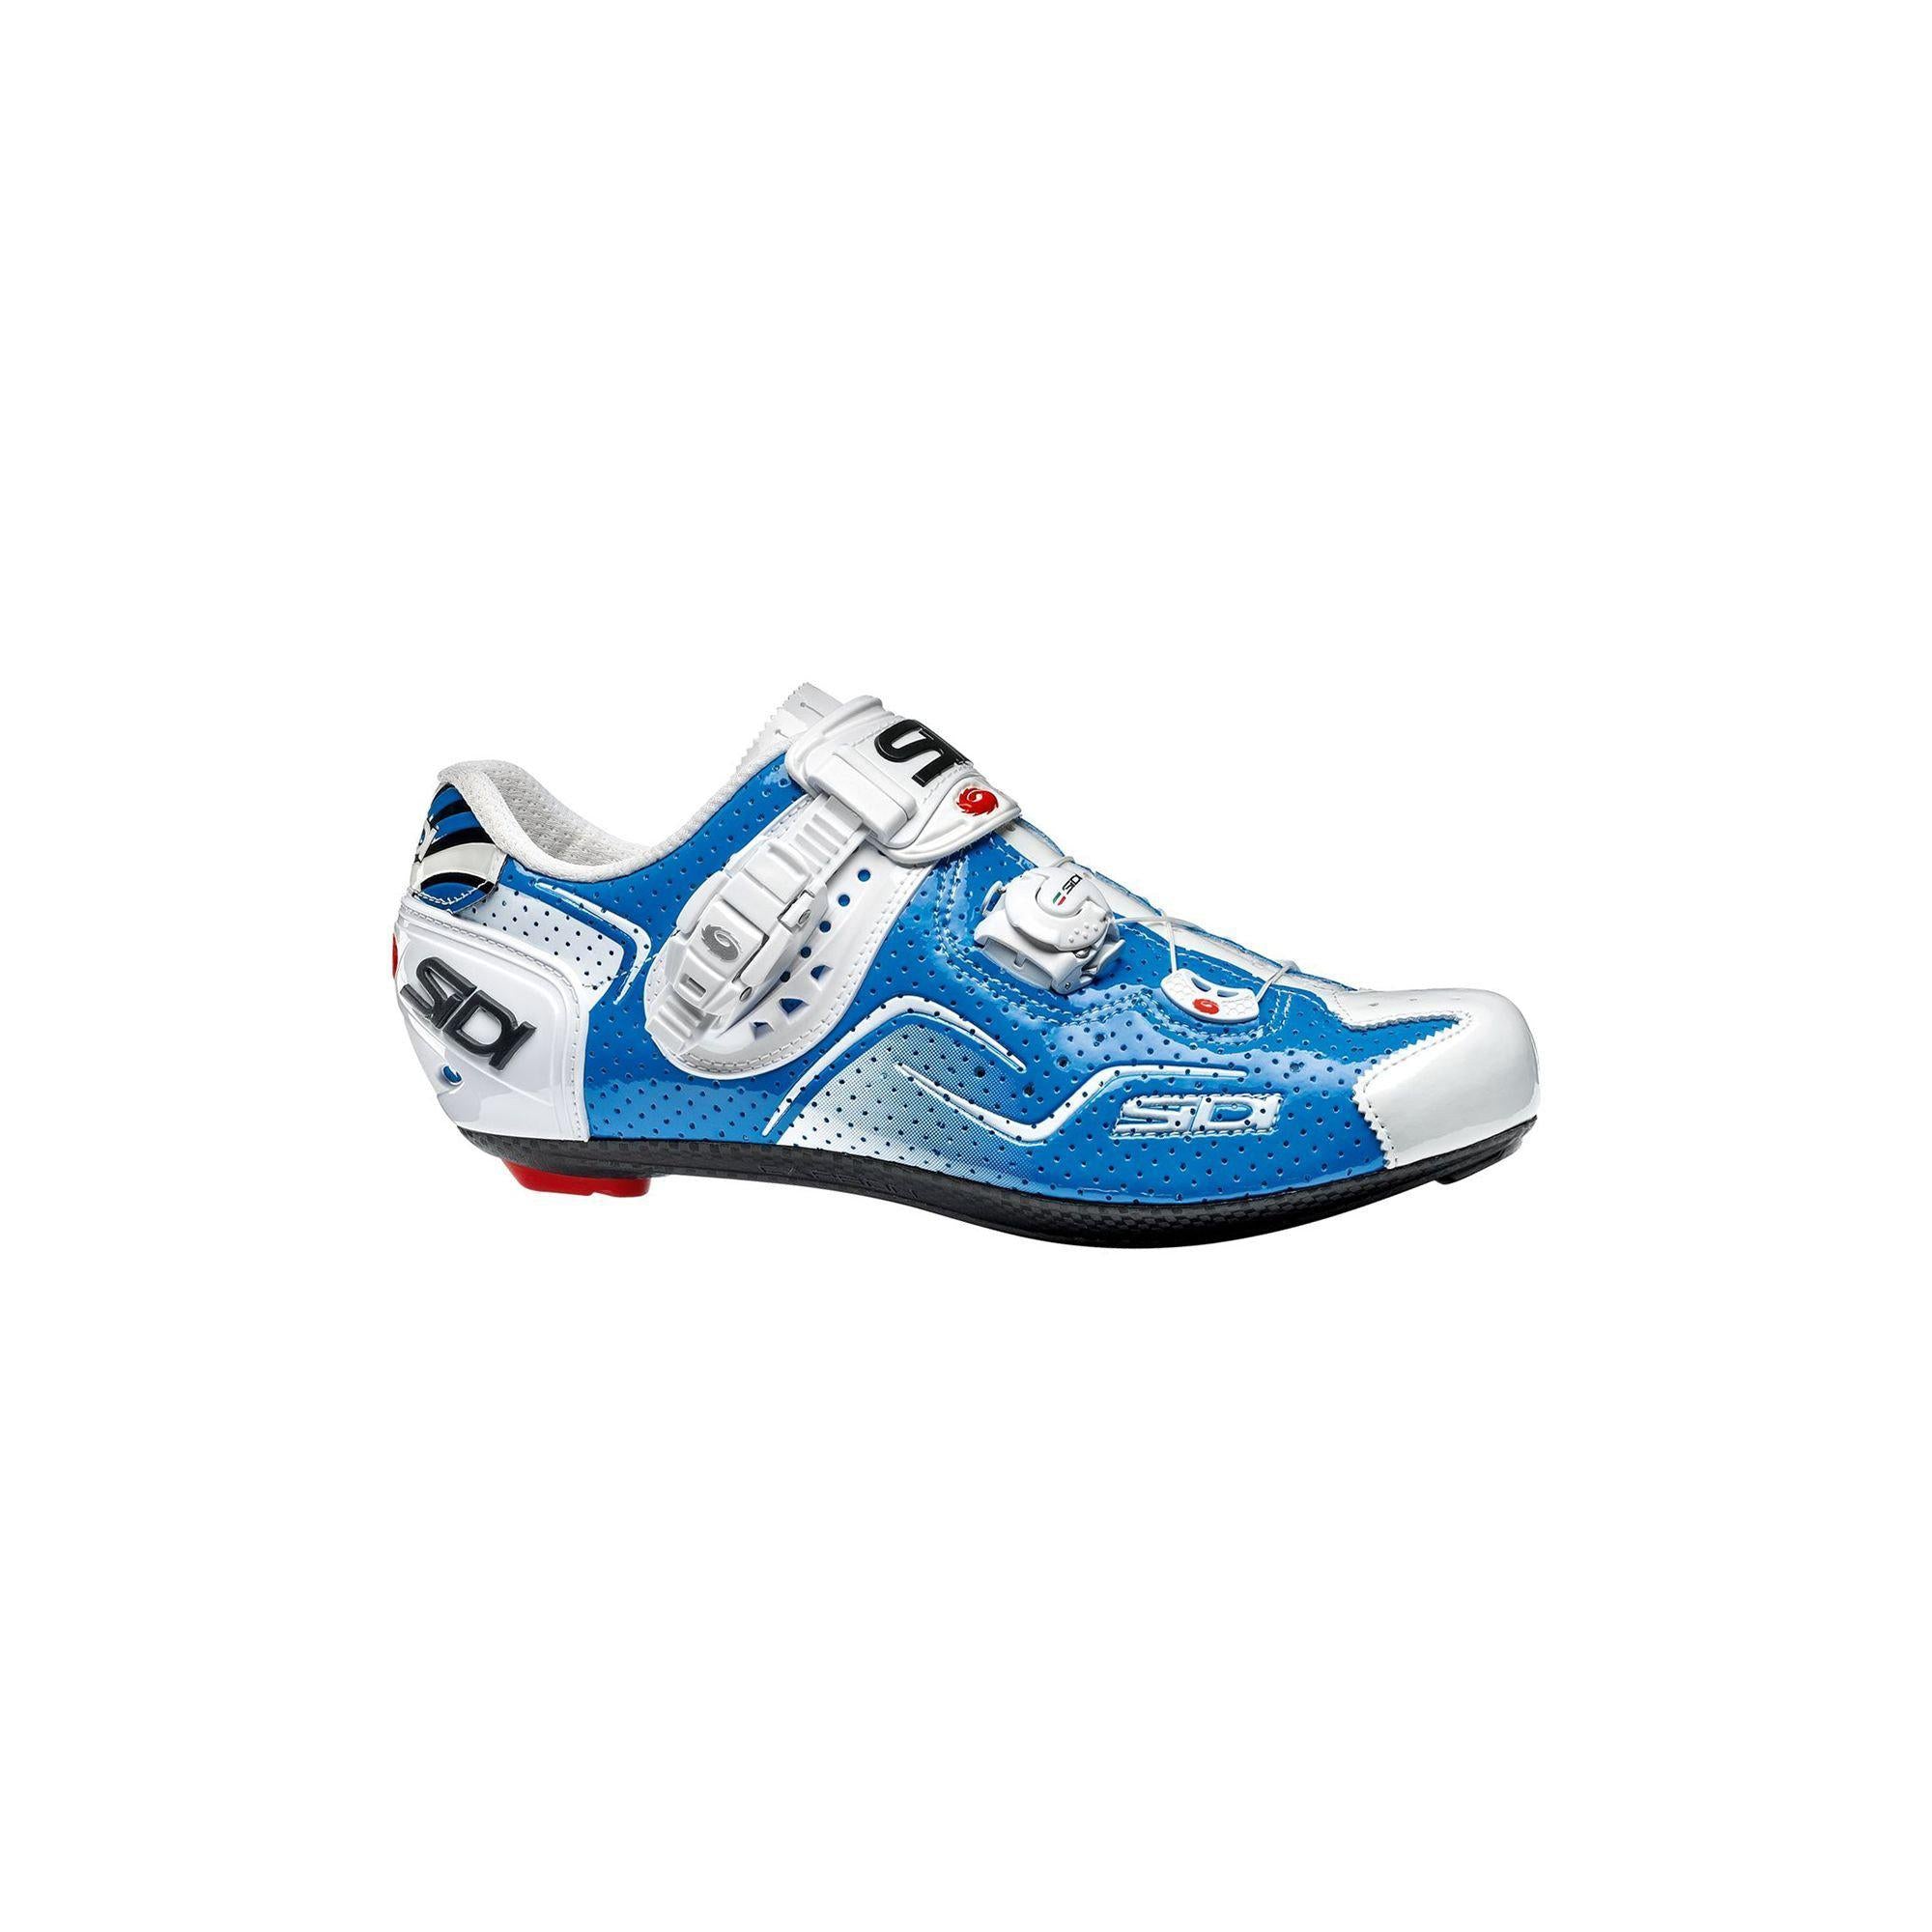 Sidi Kaos Air Road Shoes – Saddleback Elite Performance Cycling